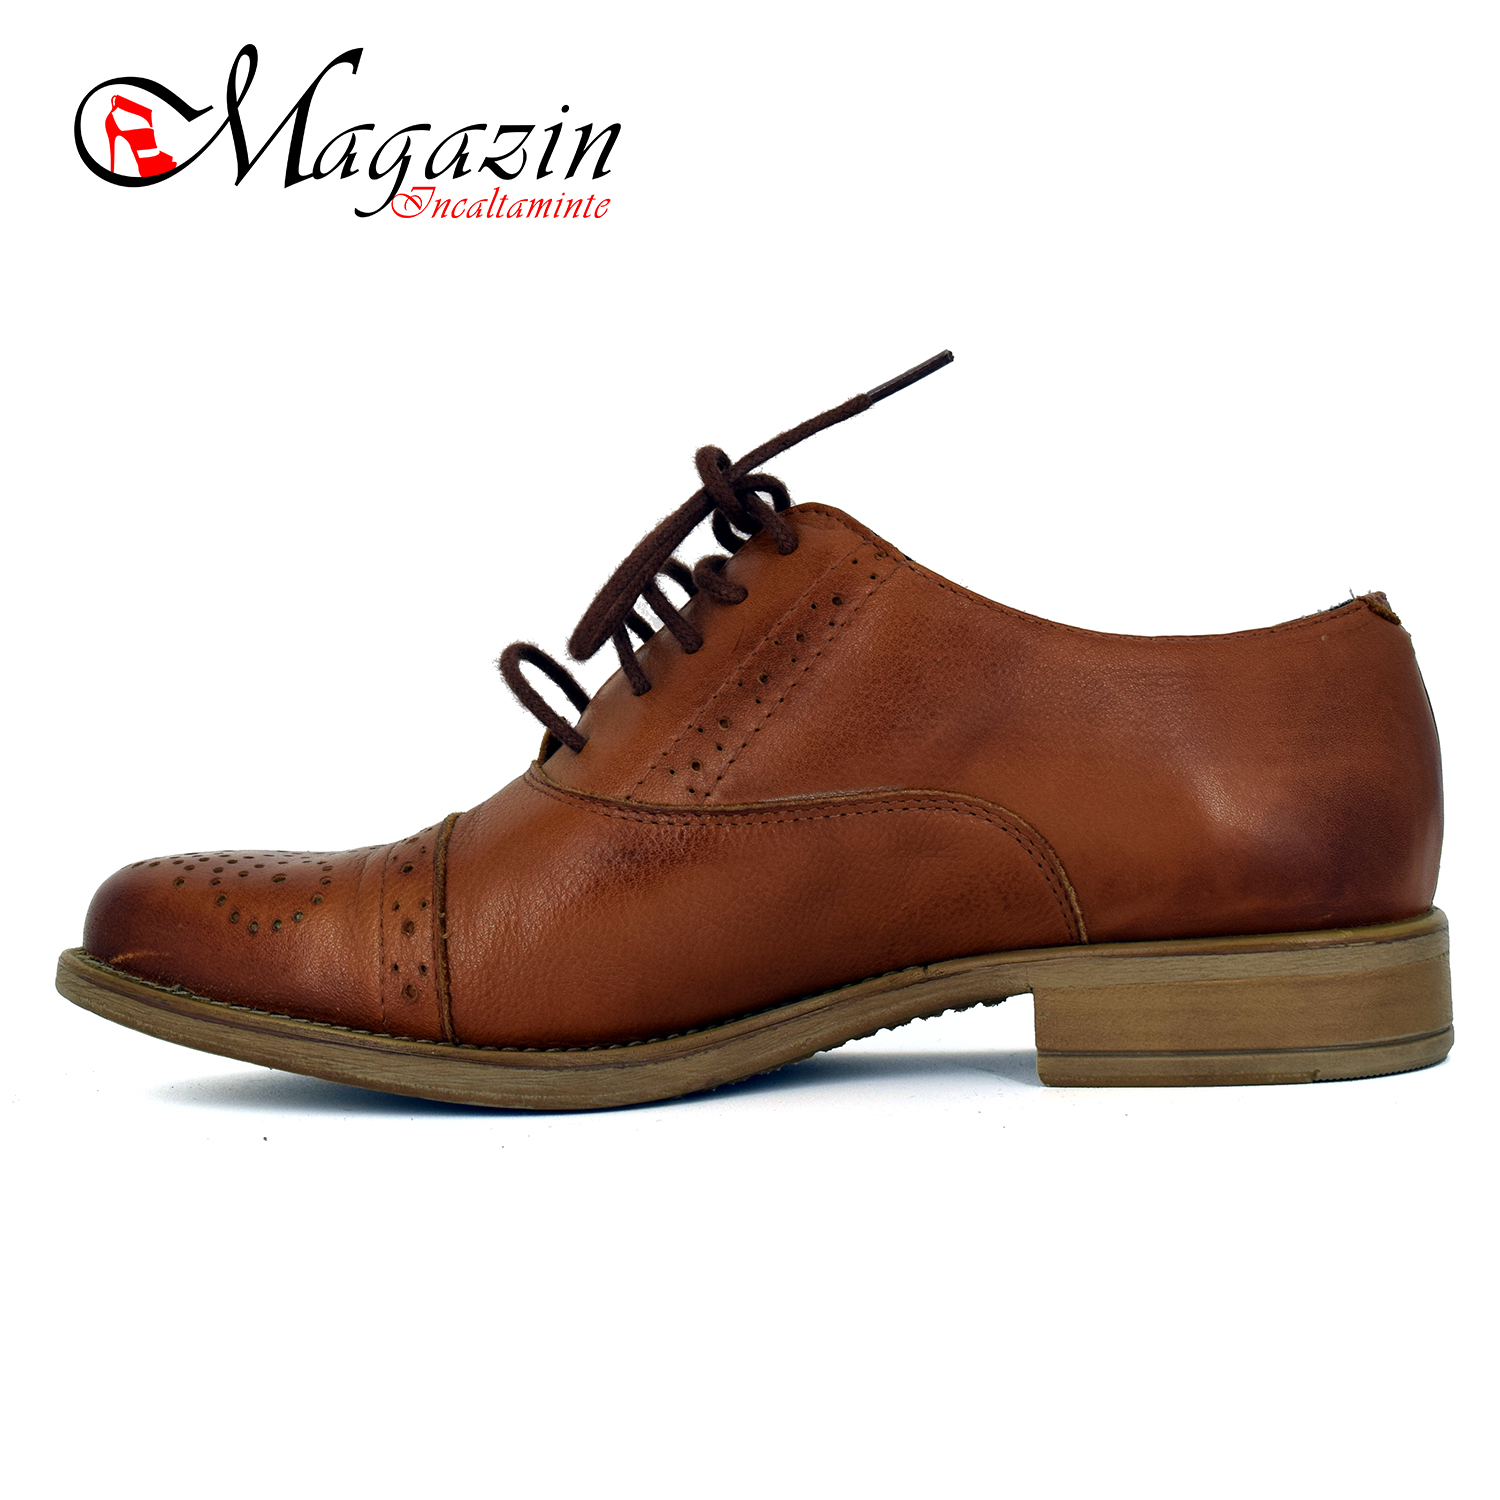 Pantofi dama piele naturala - Caspian - Model Mania Coniac